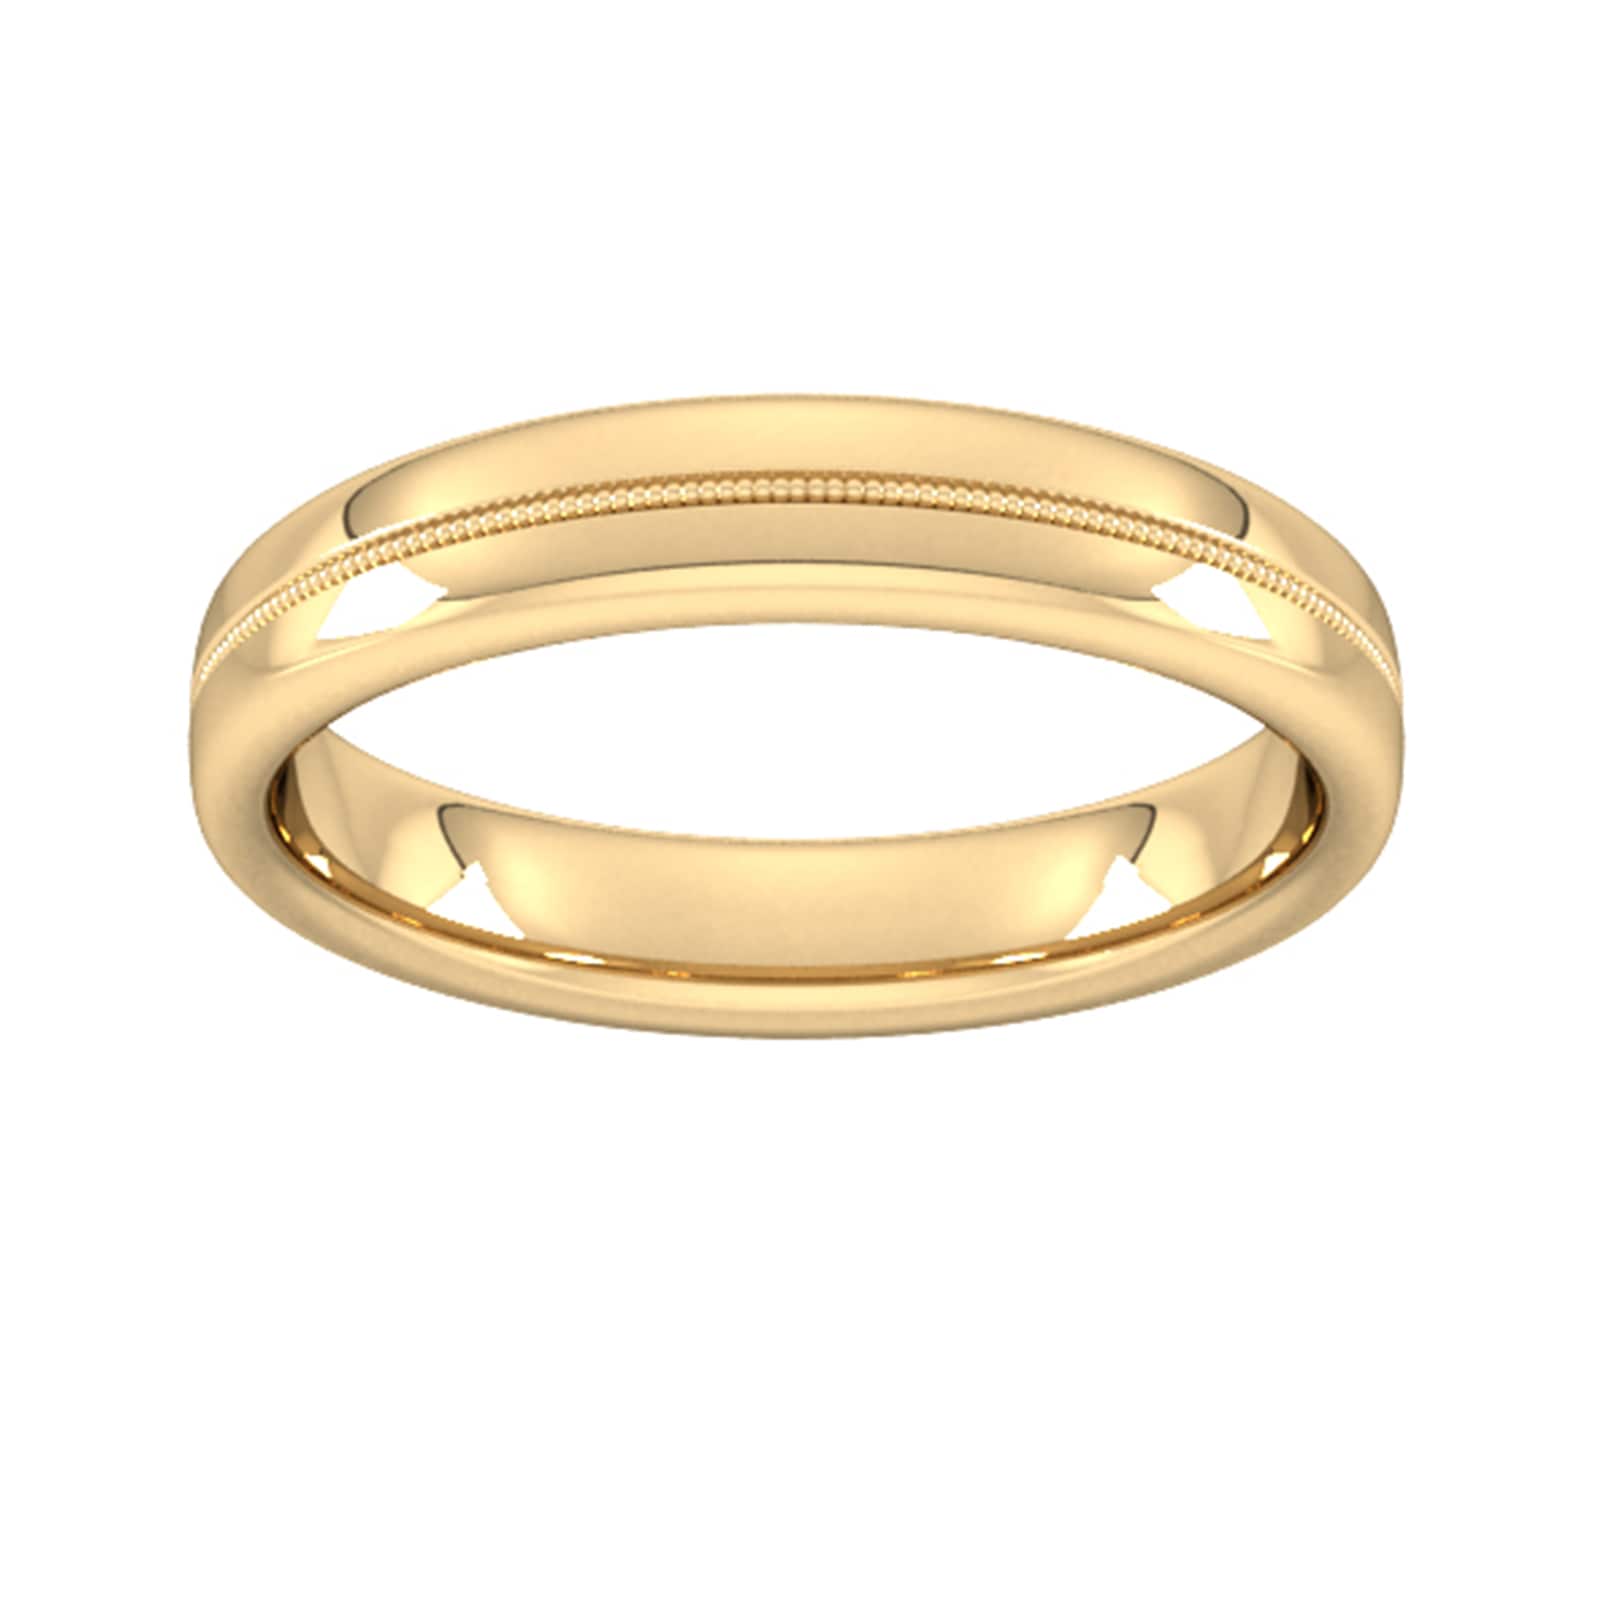 4mm Slight Court Extra Heavy Milgrain Centre Wedding Ring In 18 Carat Yellow Gold - Ring Size Q